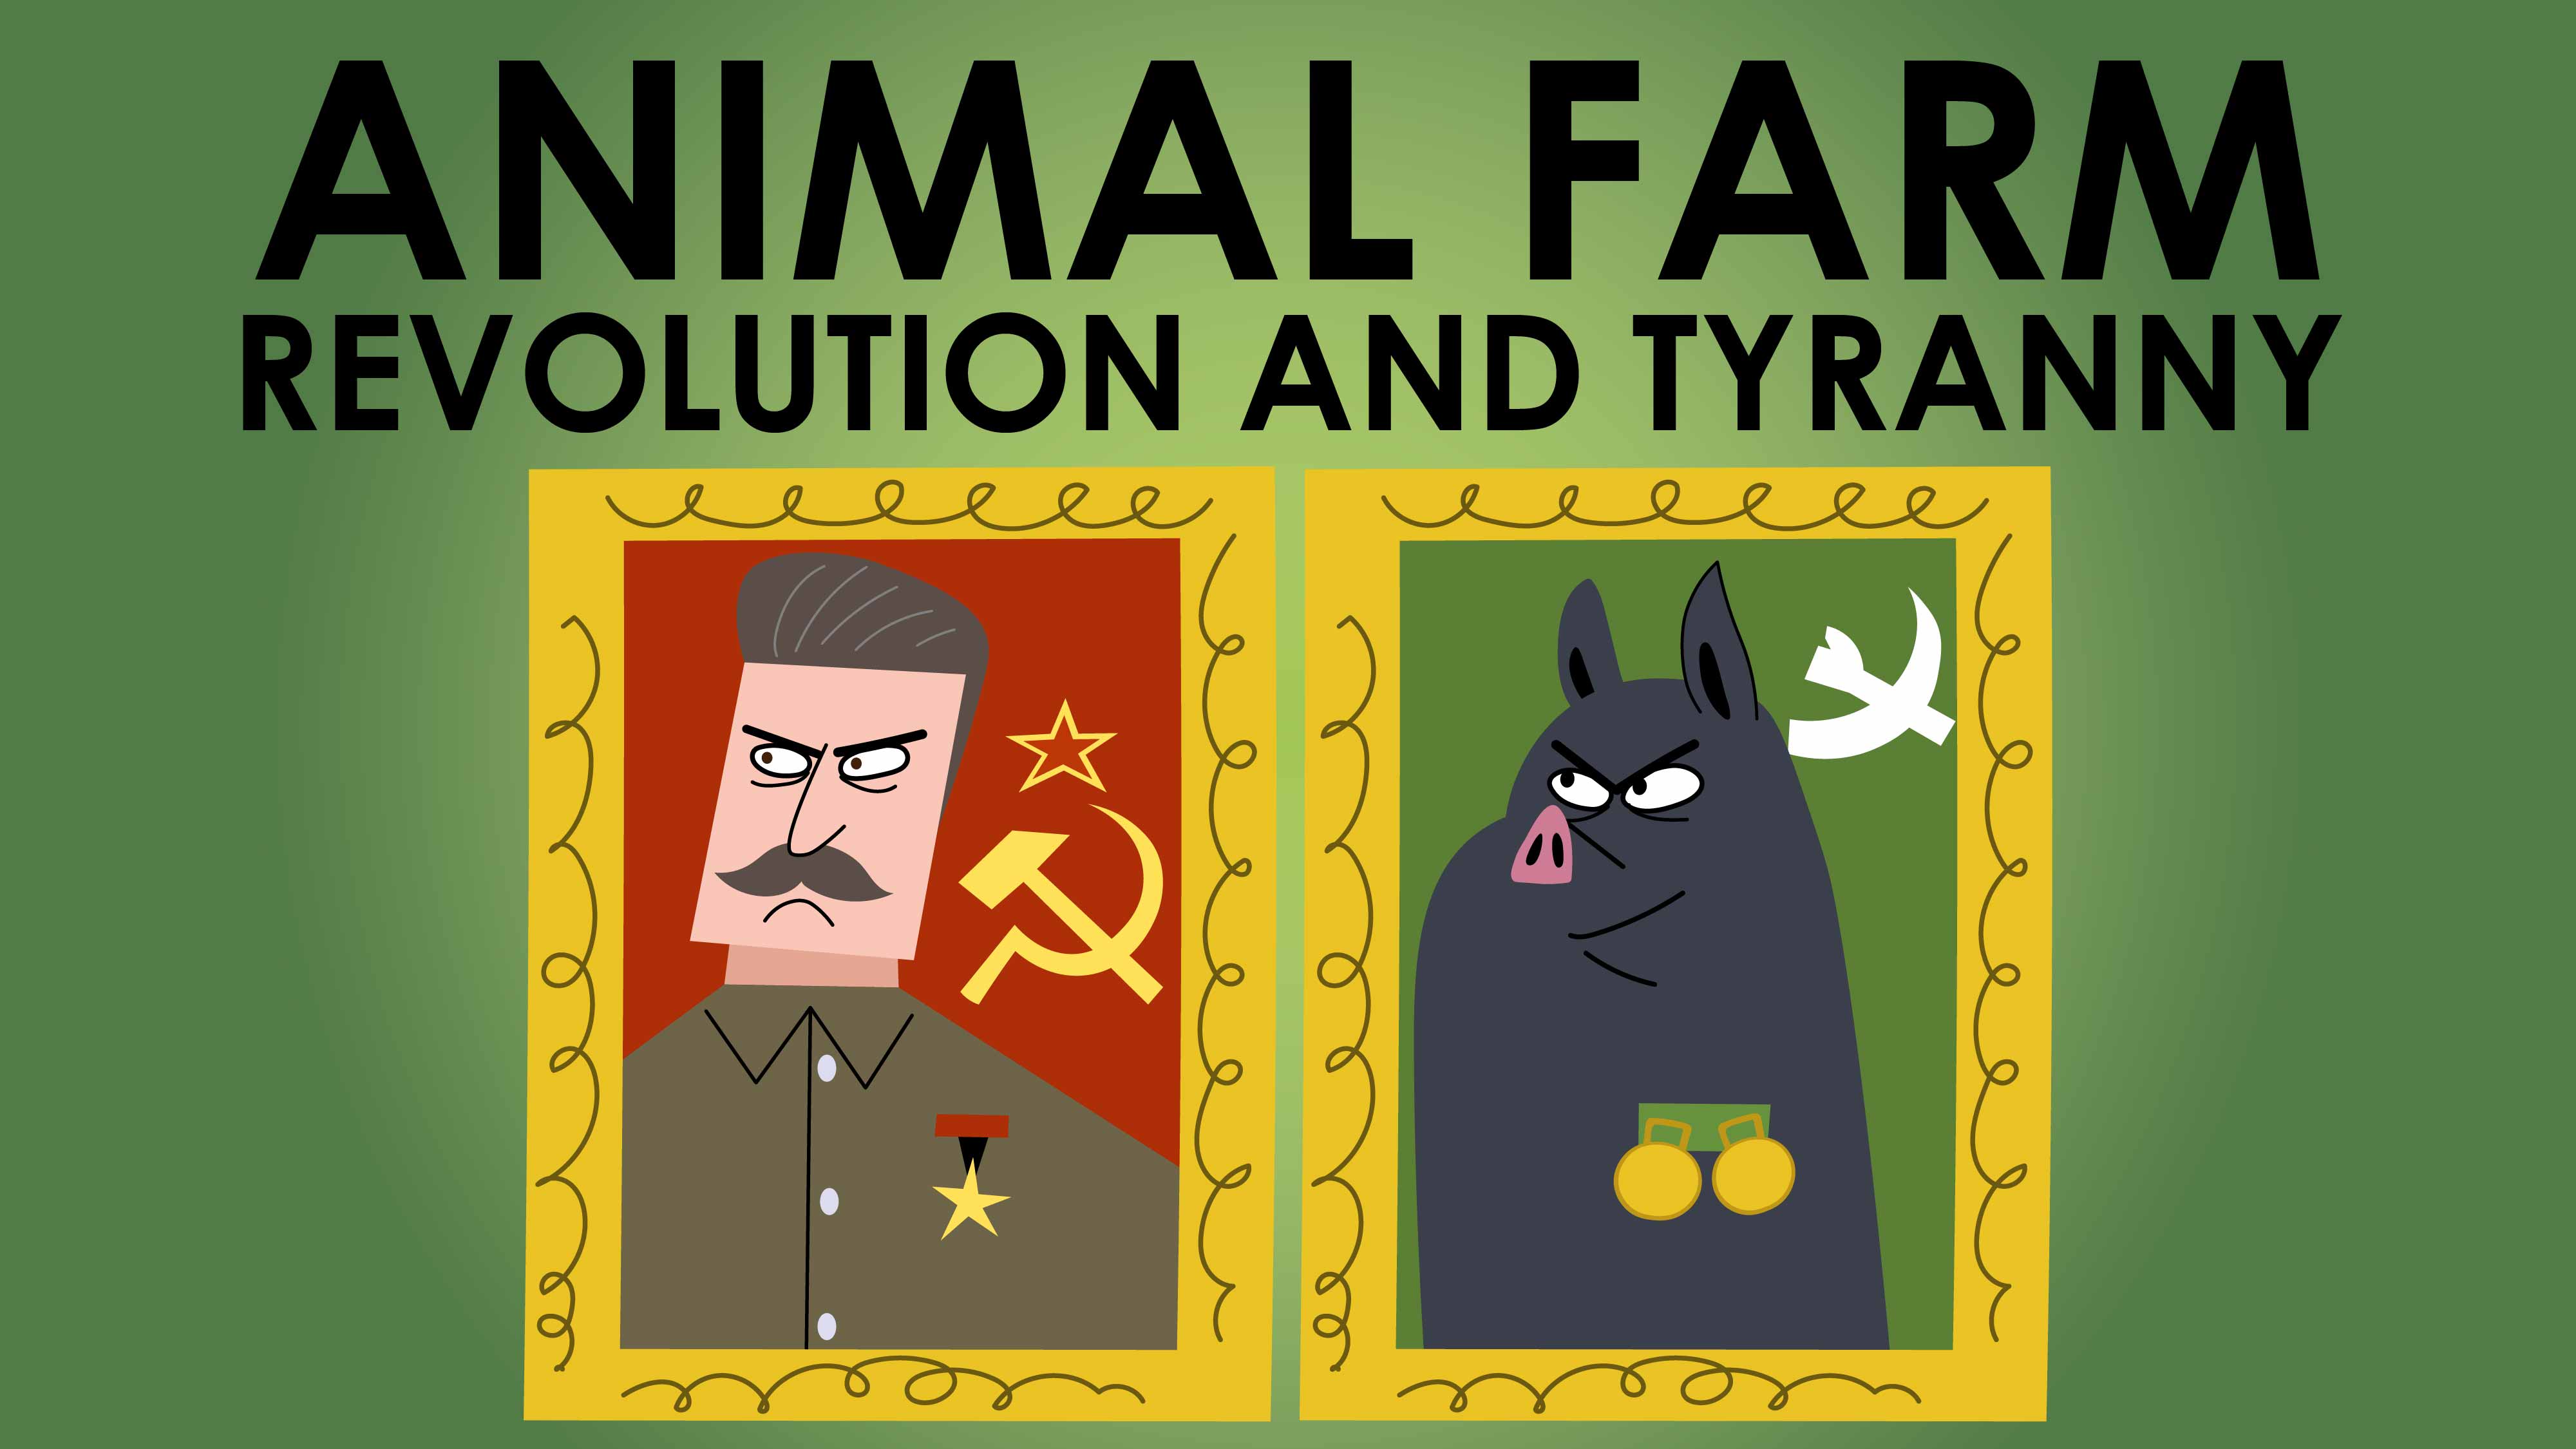 Animal Farm - George Orwell - Theme of Revolution and Tyranny - Powering Through Prose Series